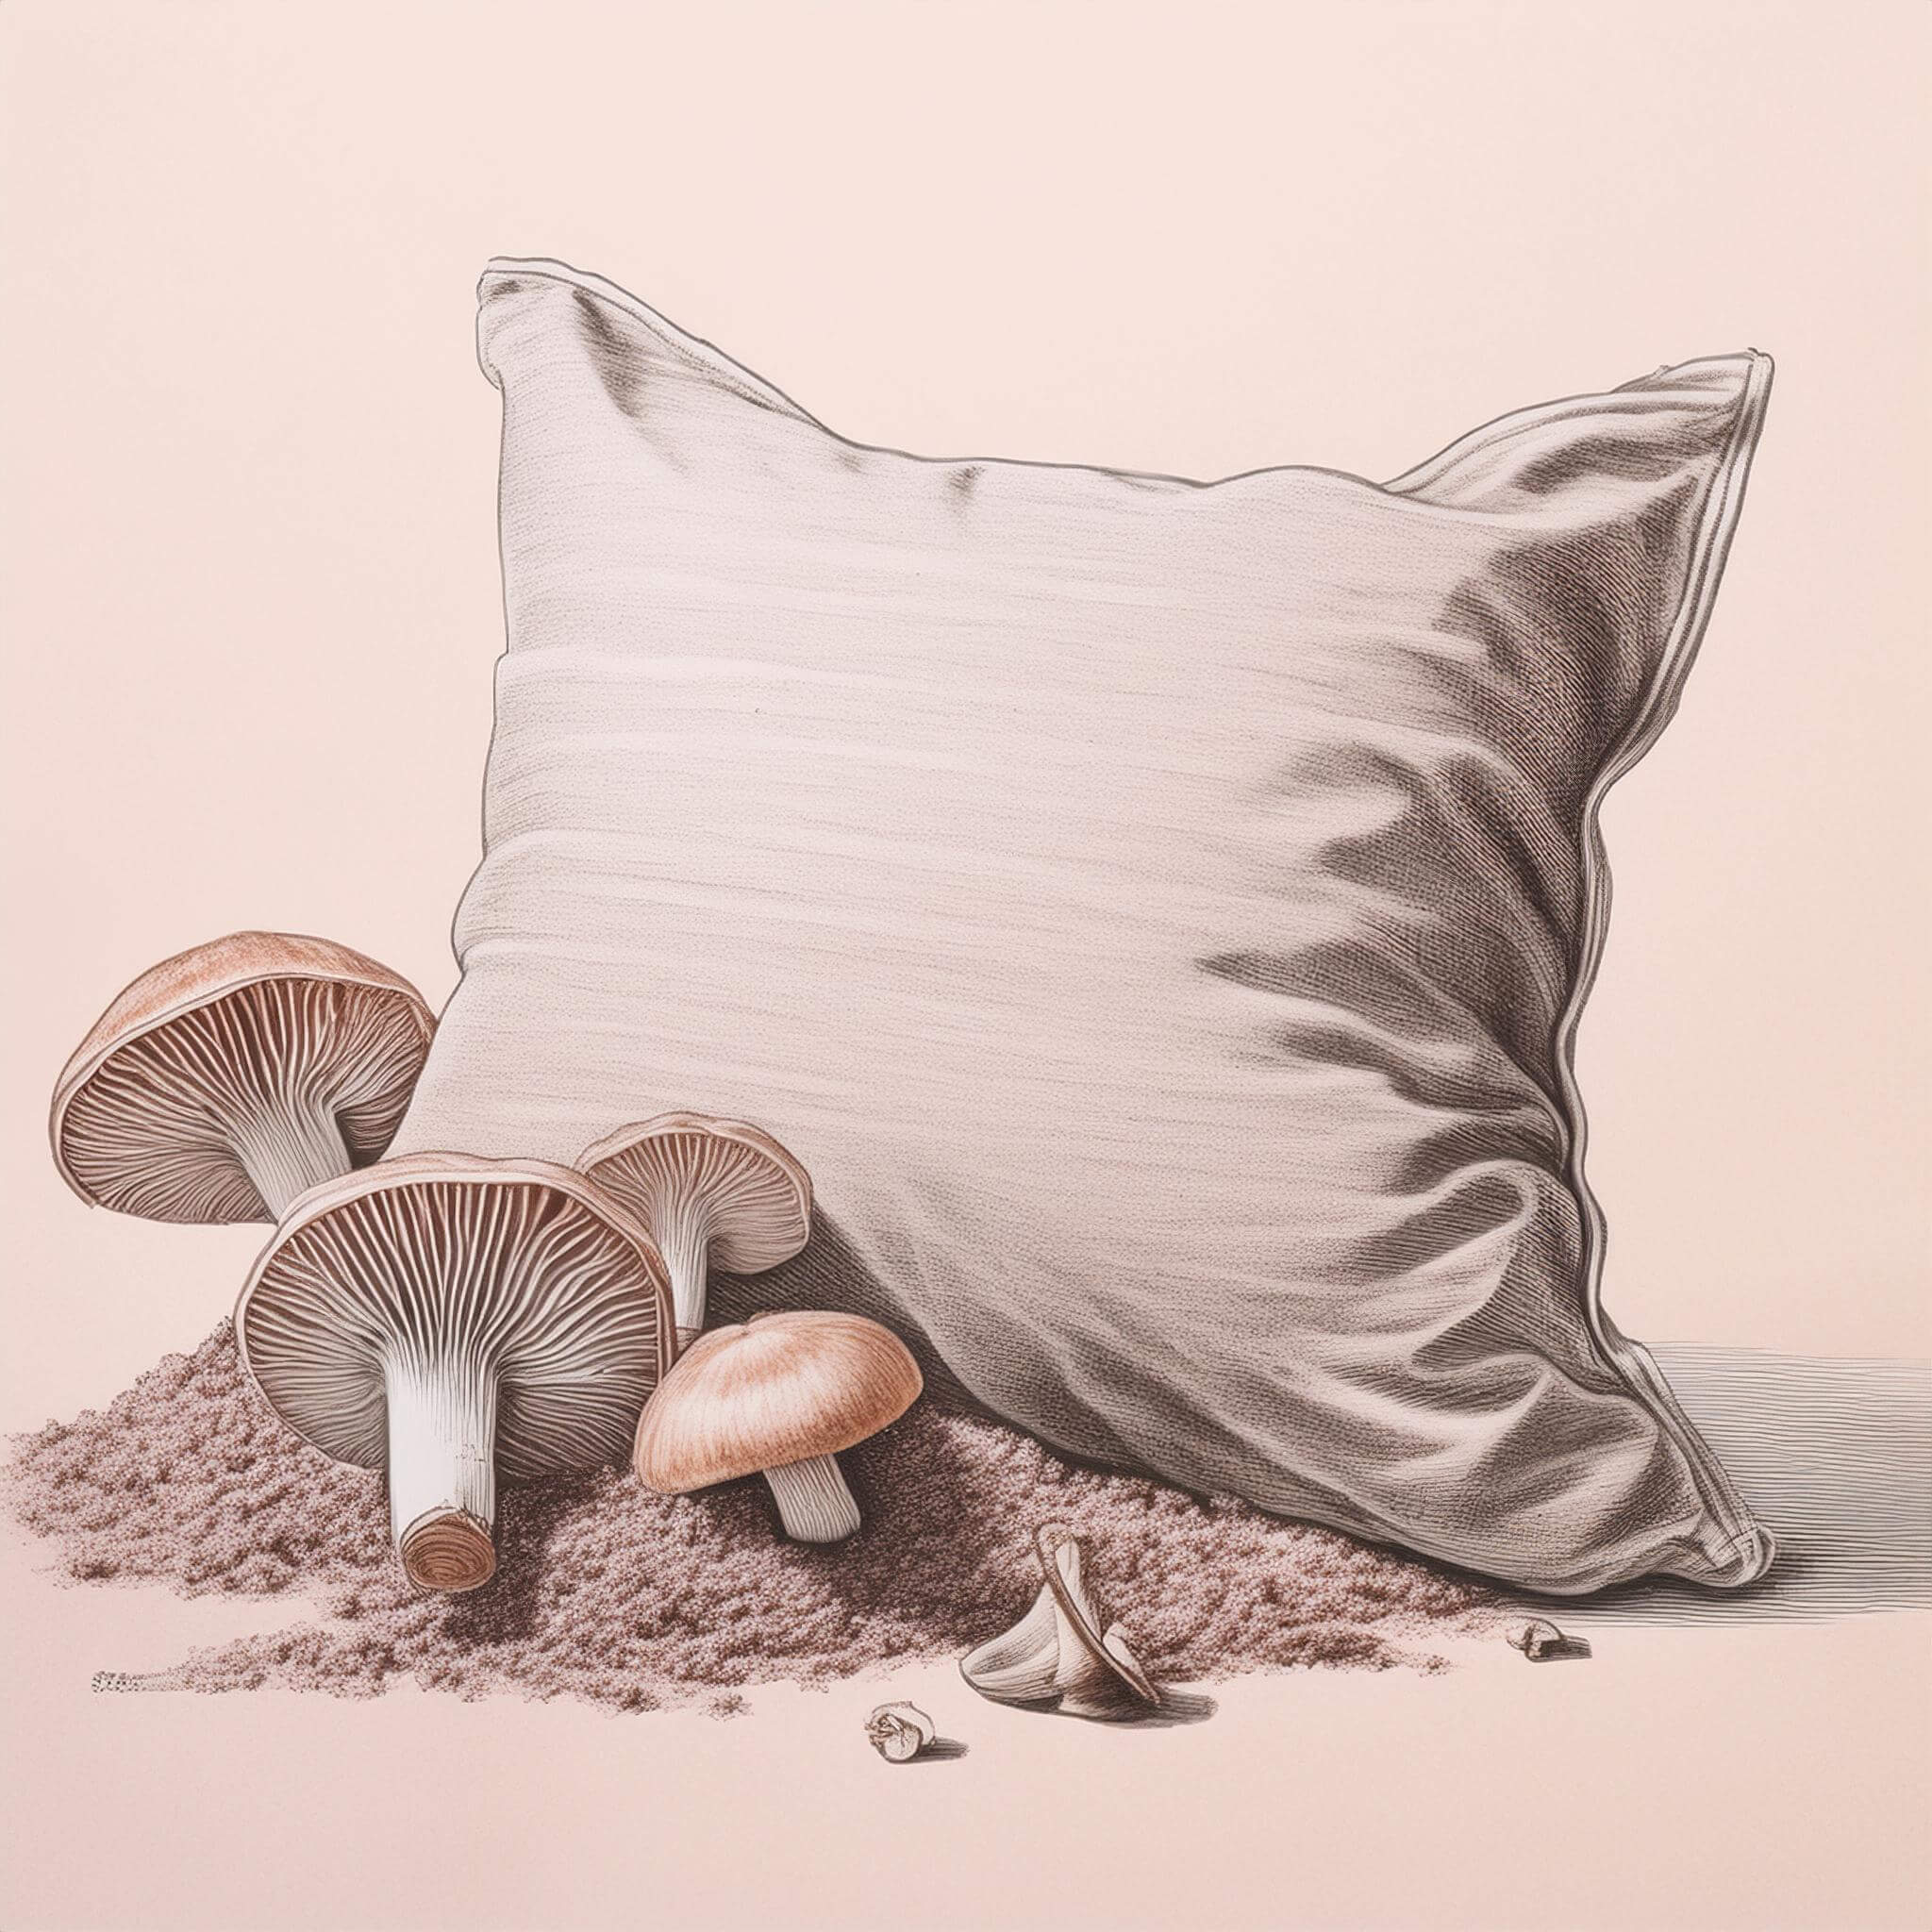 drawing of mushrooms and mushroom powder and a pillow illustrating mushrooms for sleep